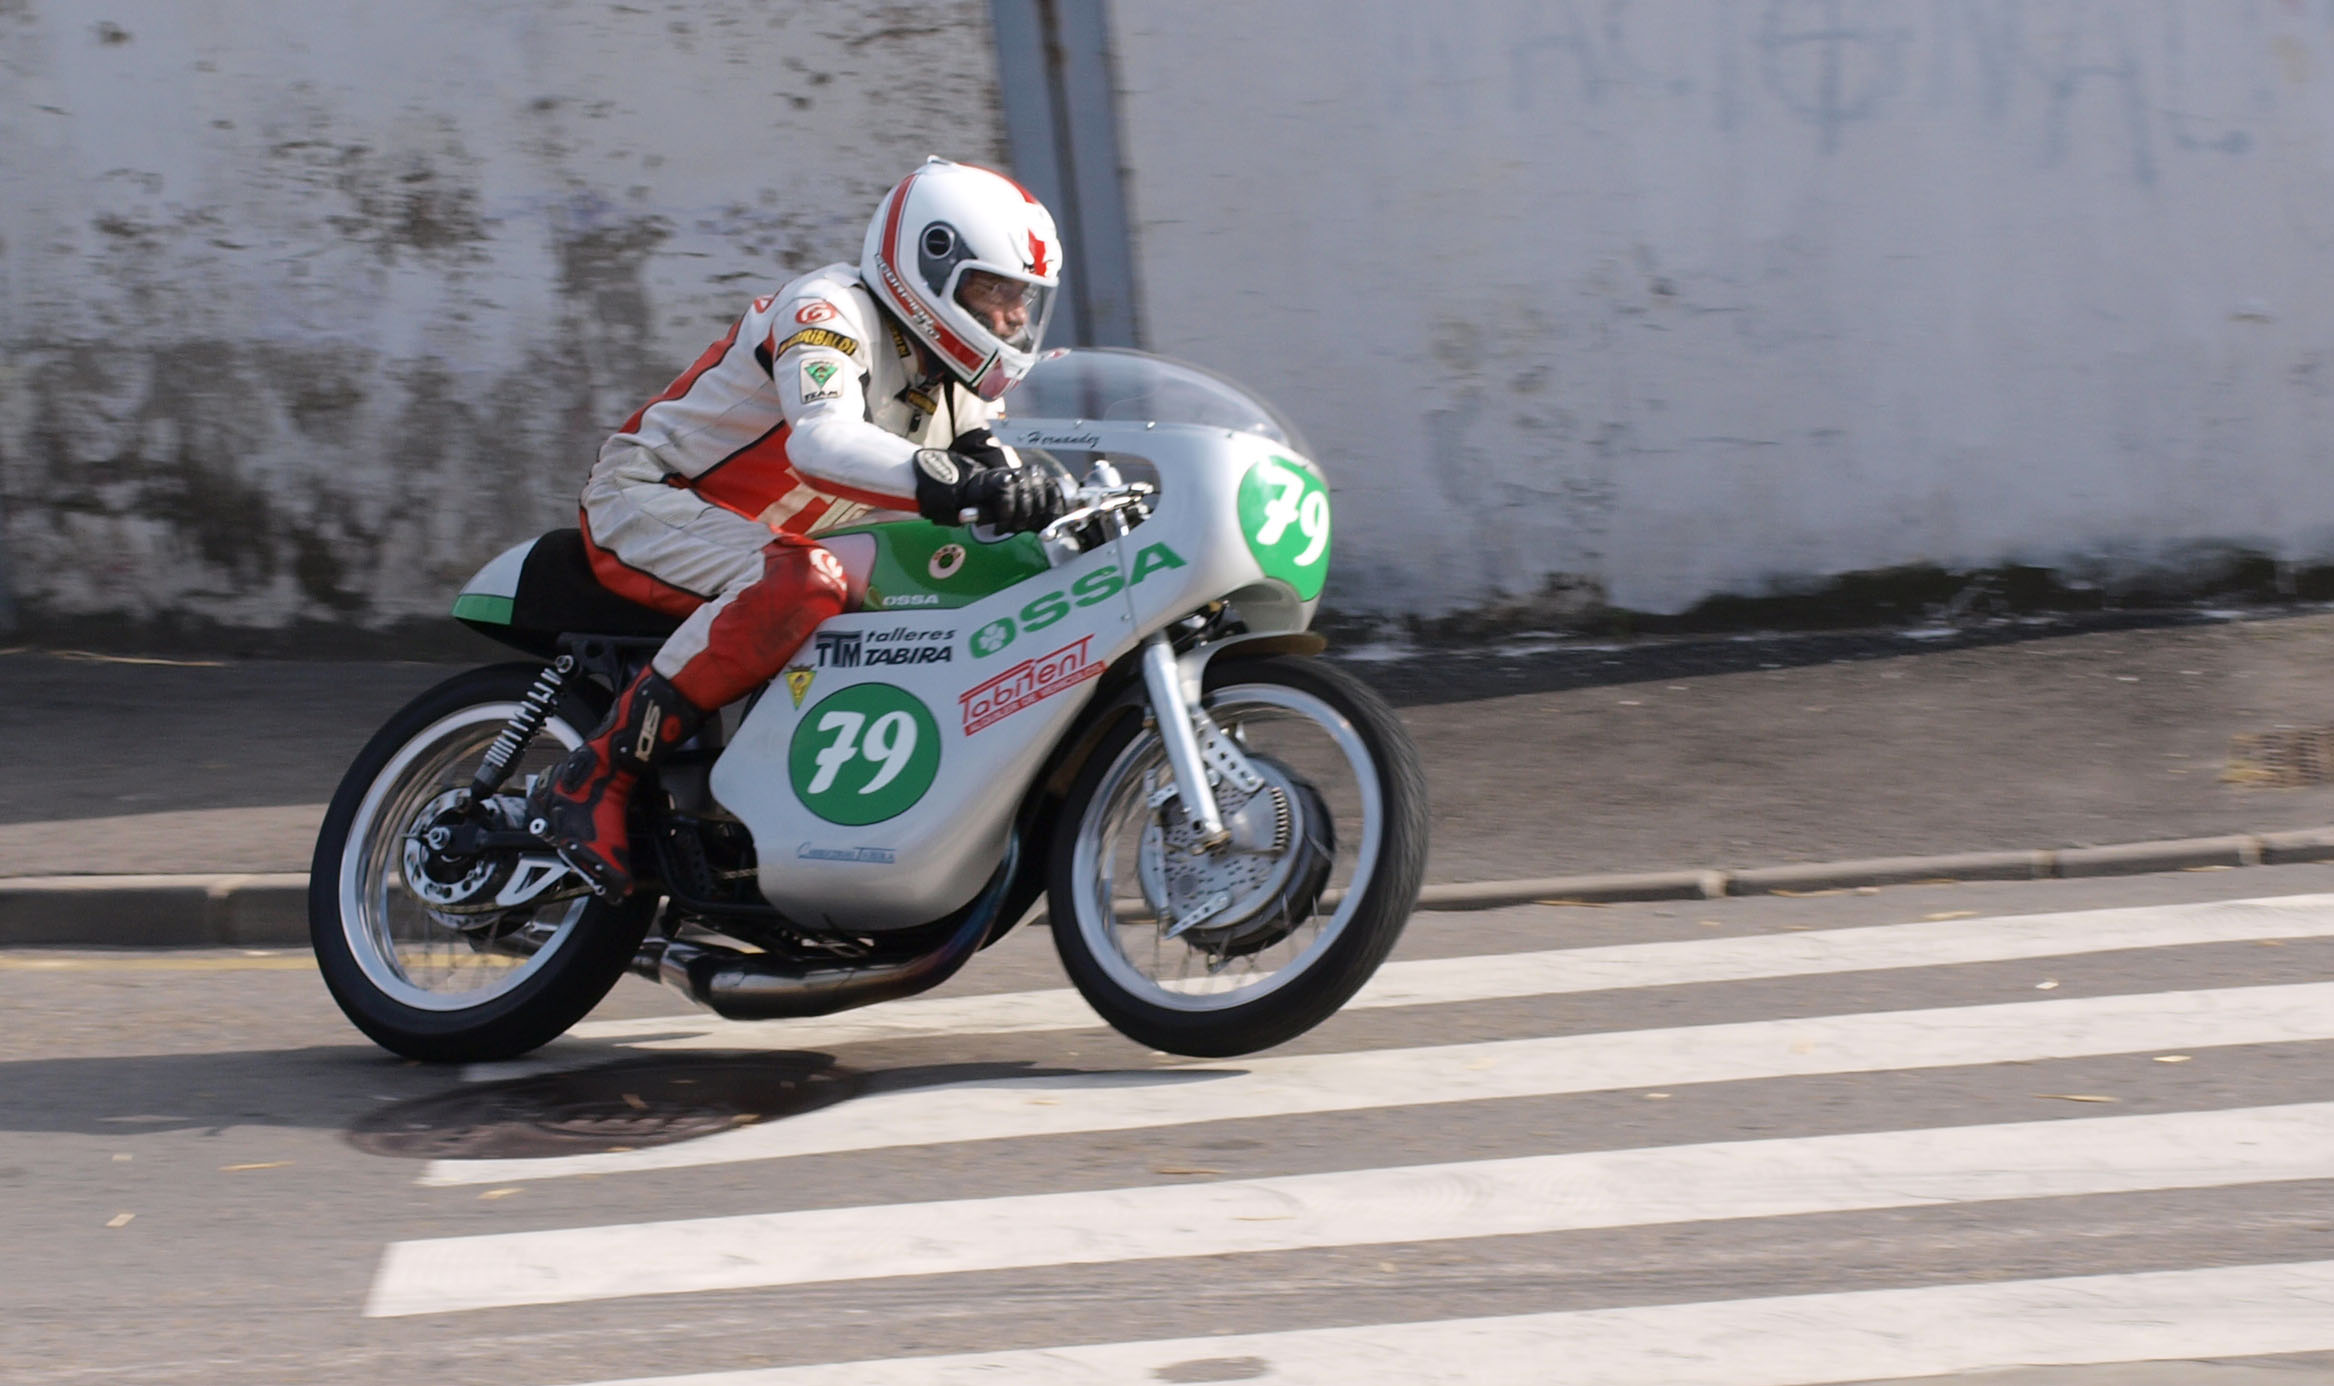 Ossa racing motorcycle 196x 2010.jpg